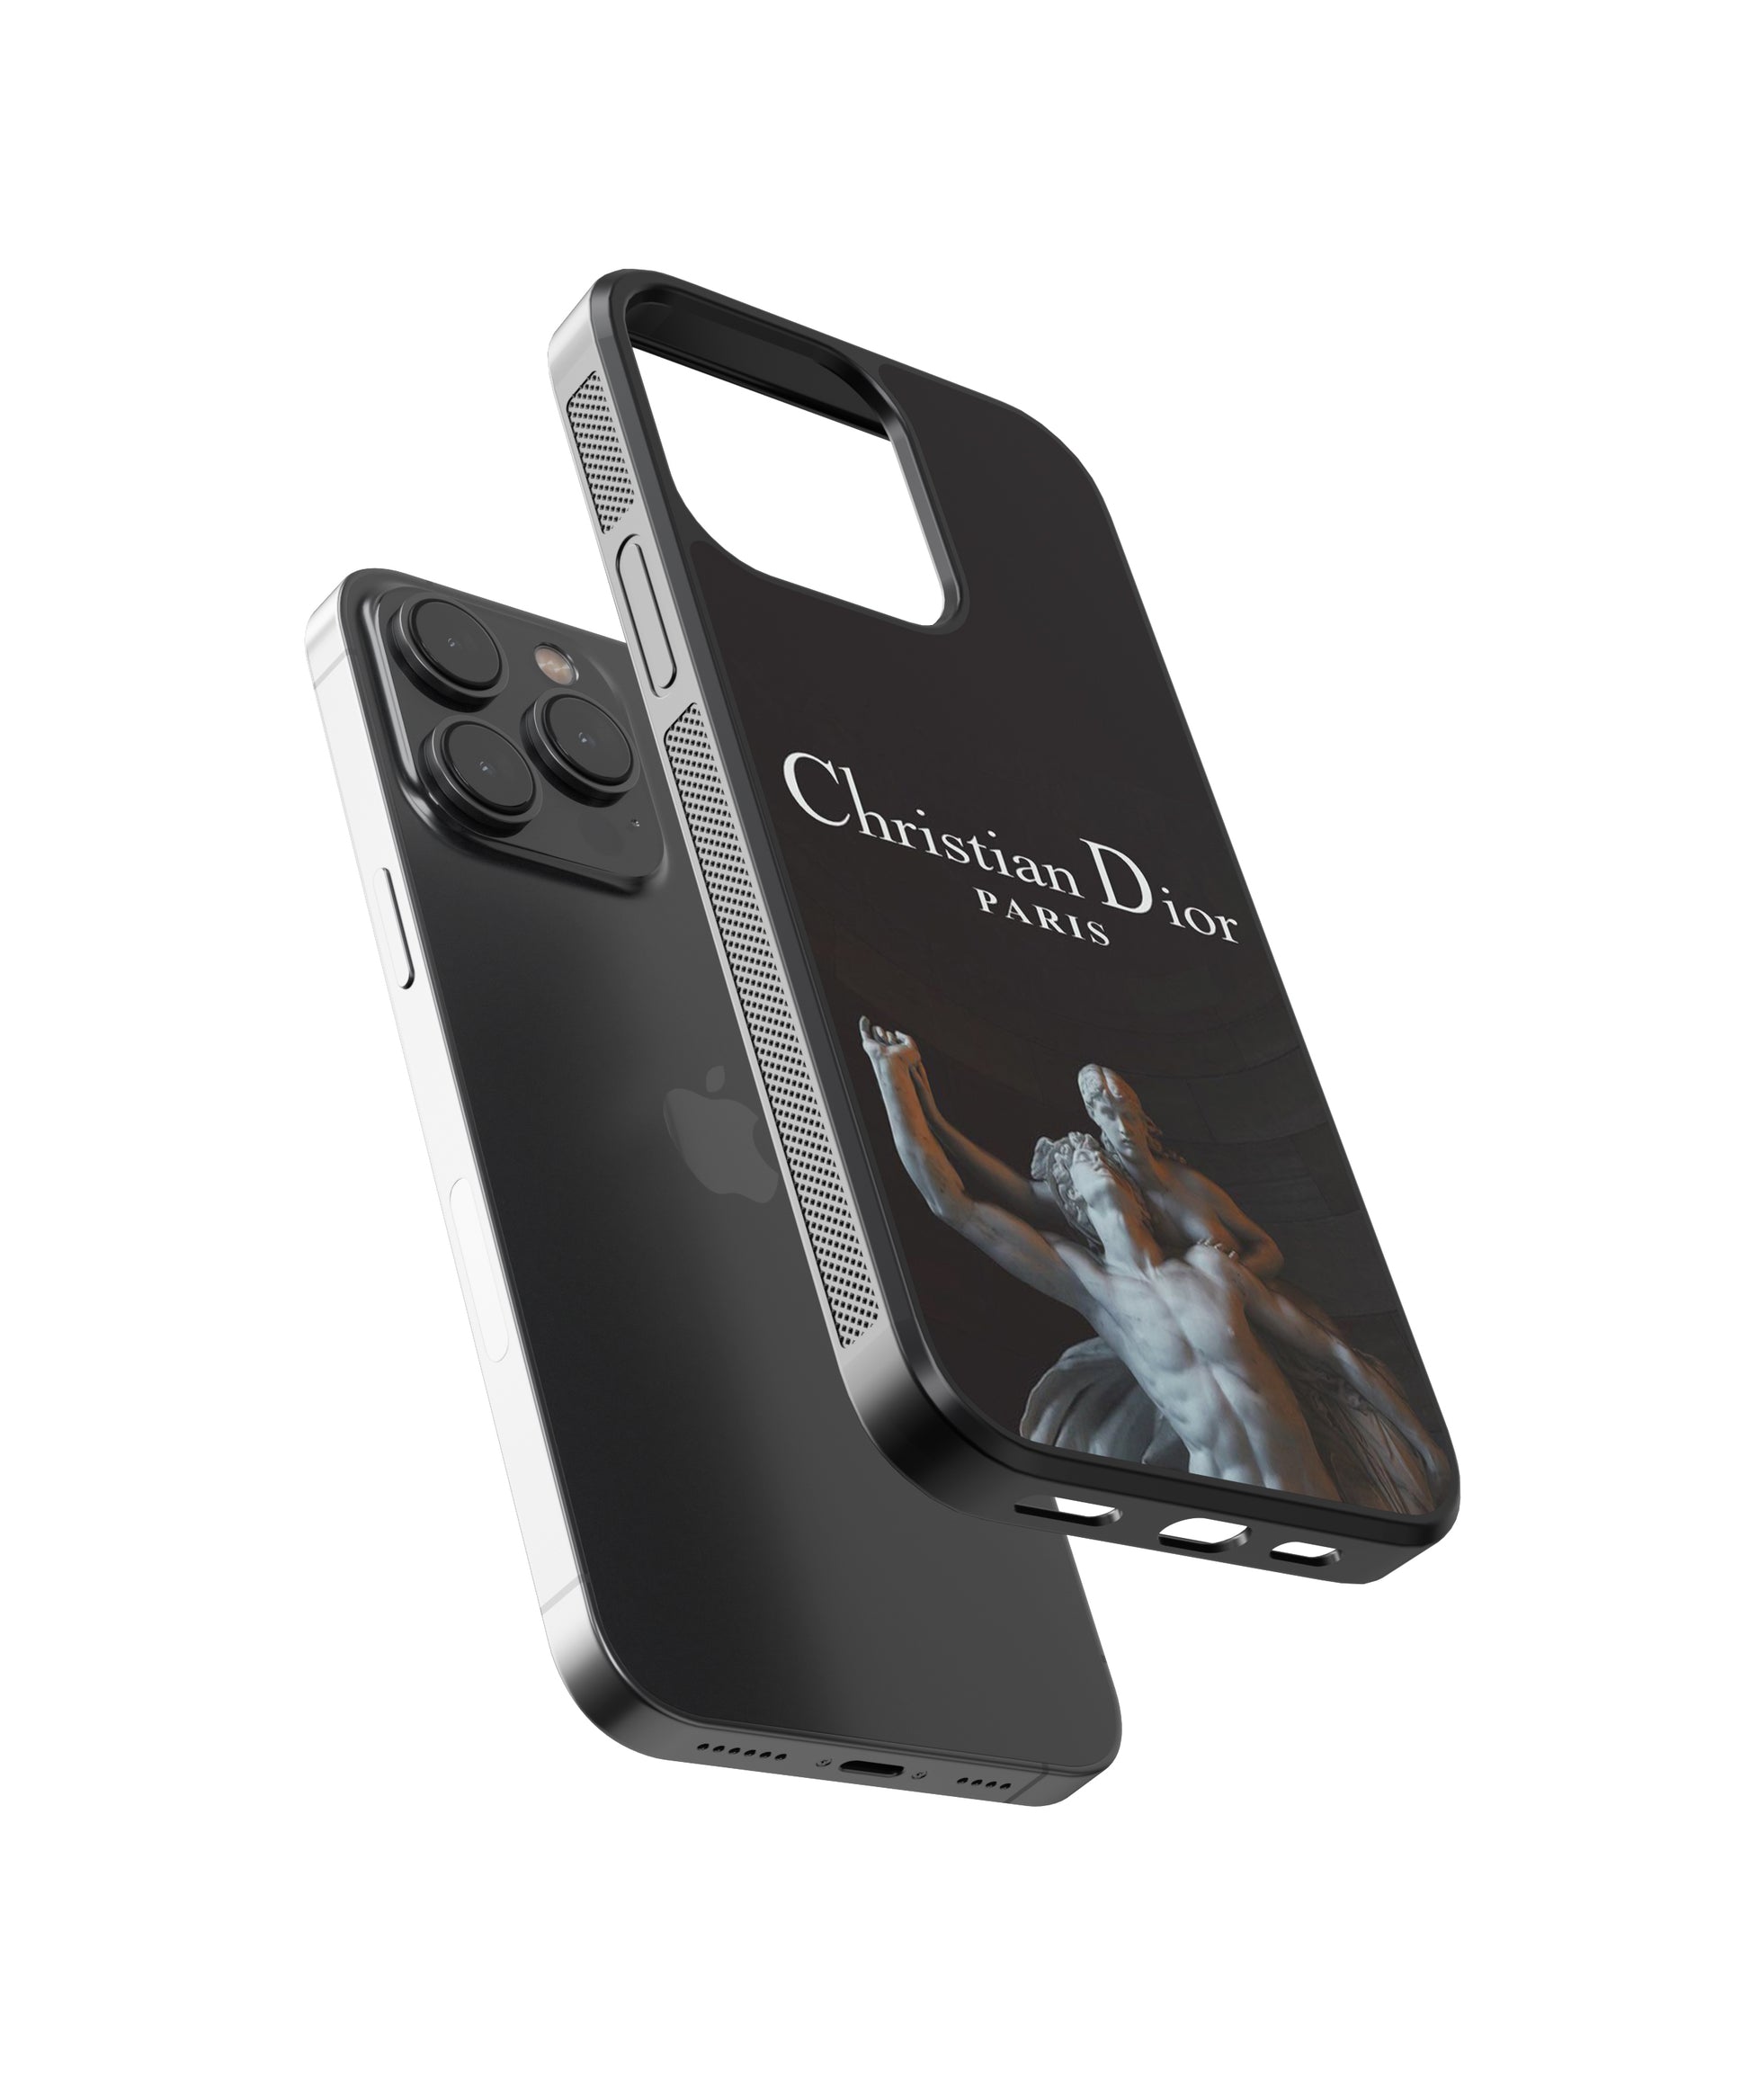 Christian Dior Paris Glass Phone Case Cover - Aesthetic Phone Cases - Culltique